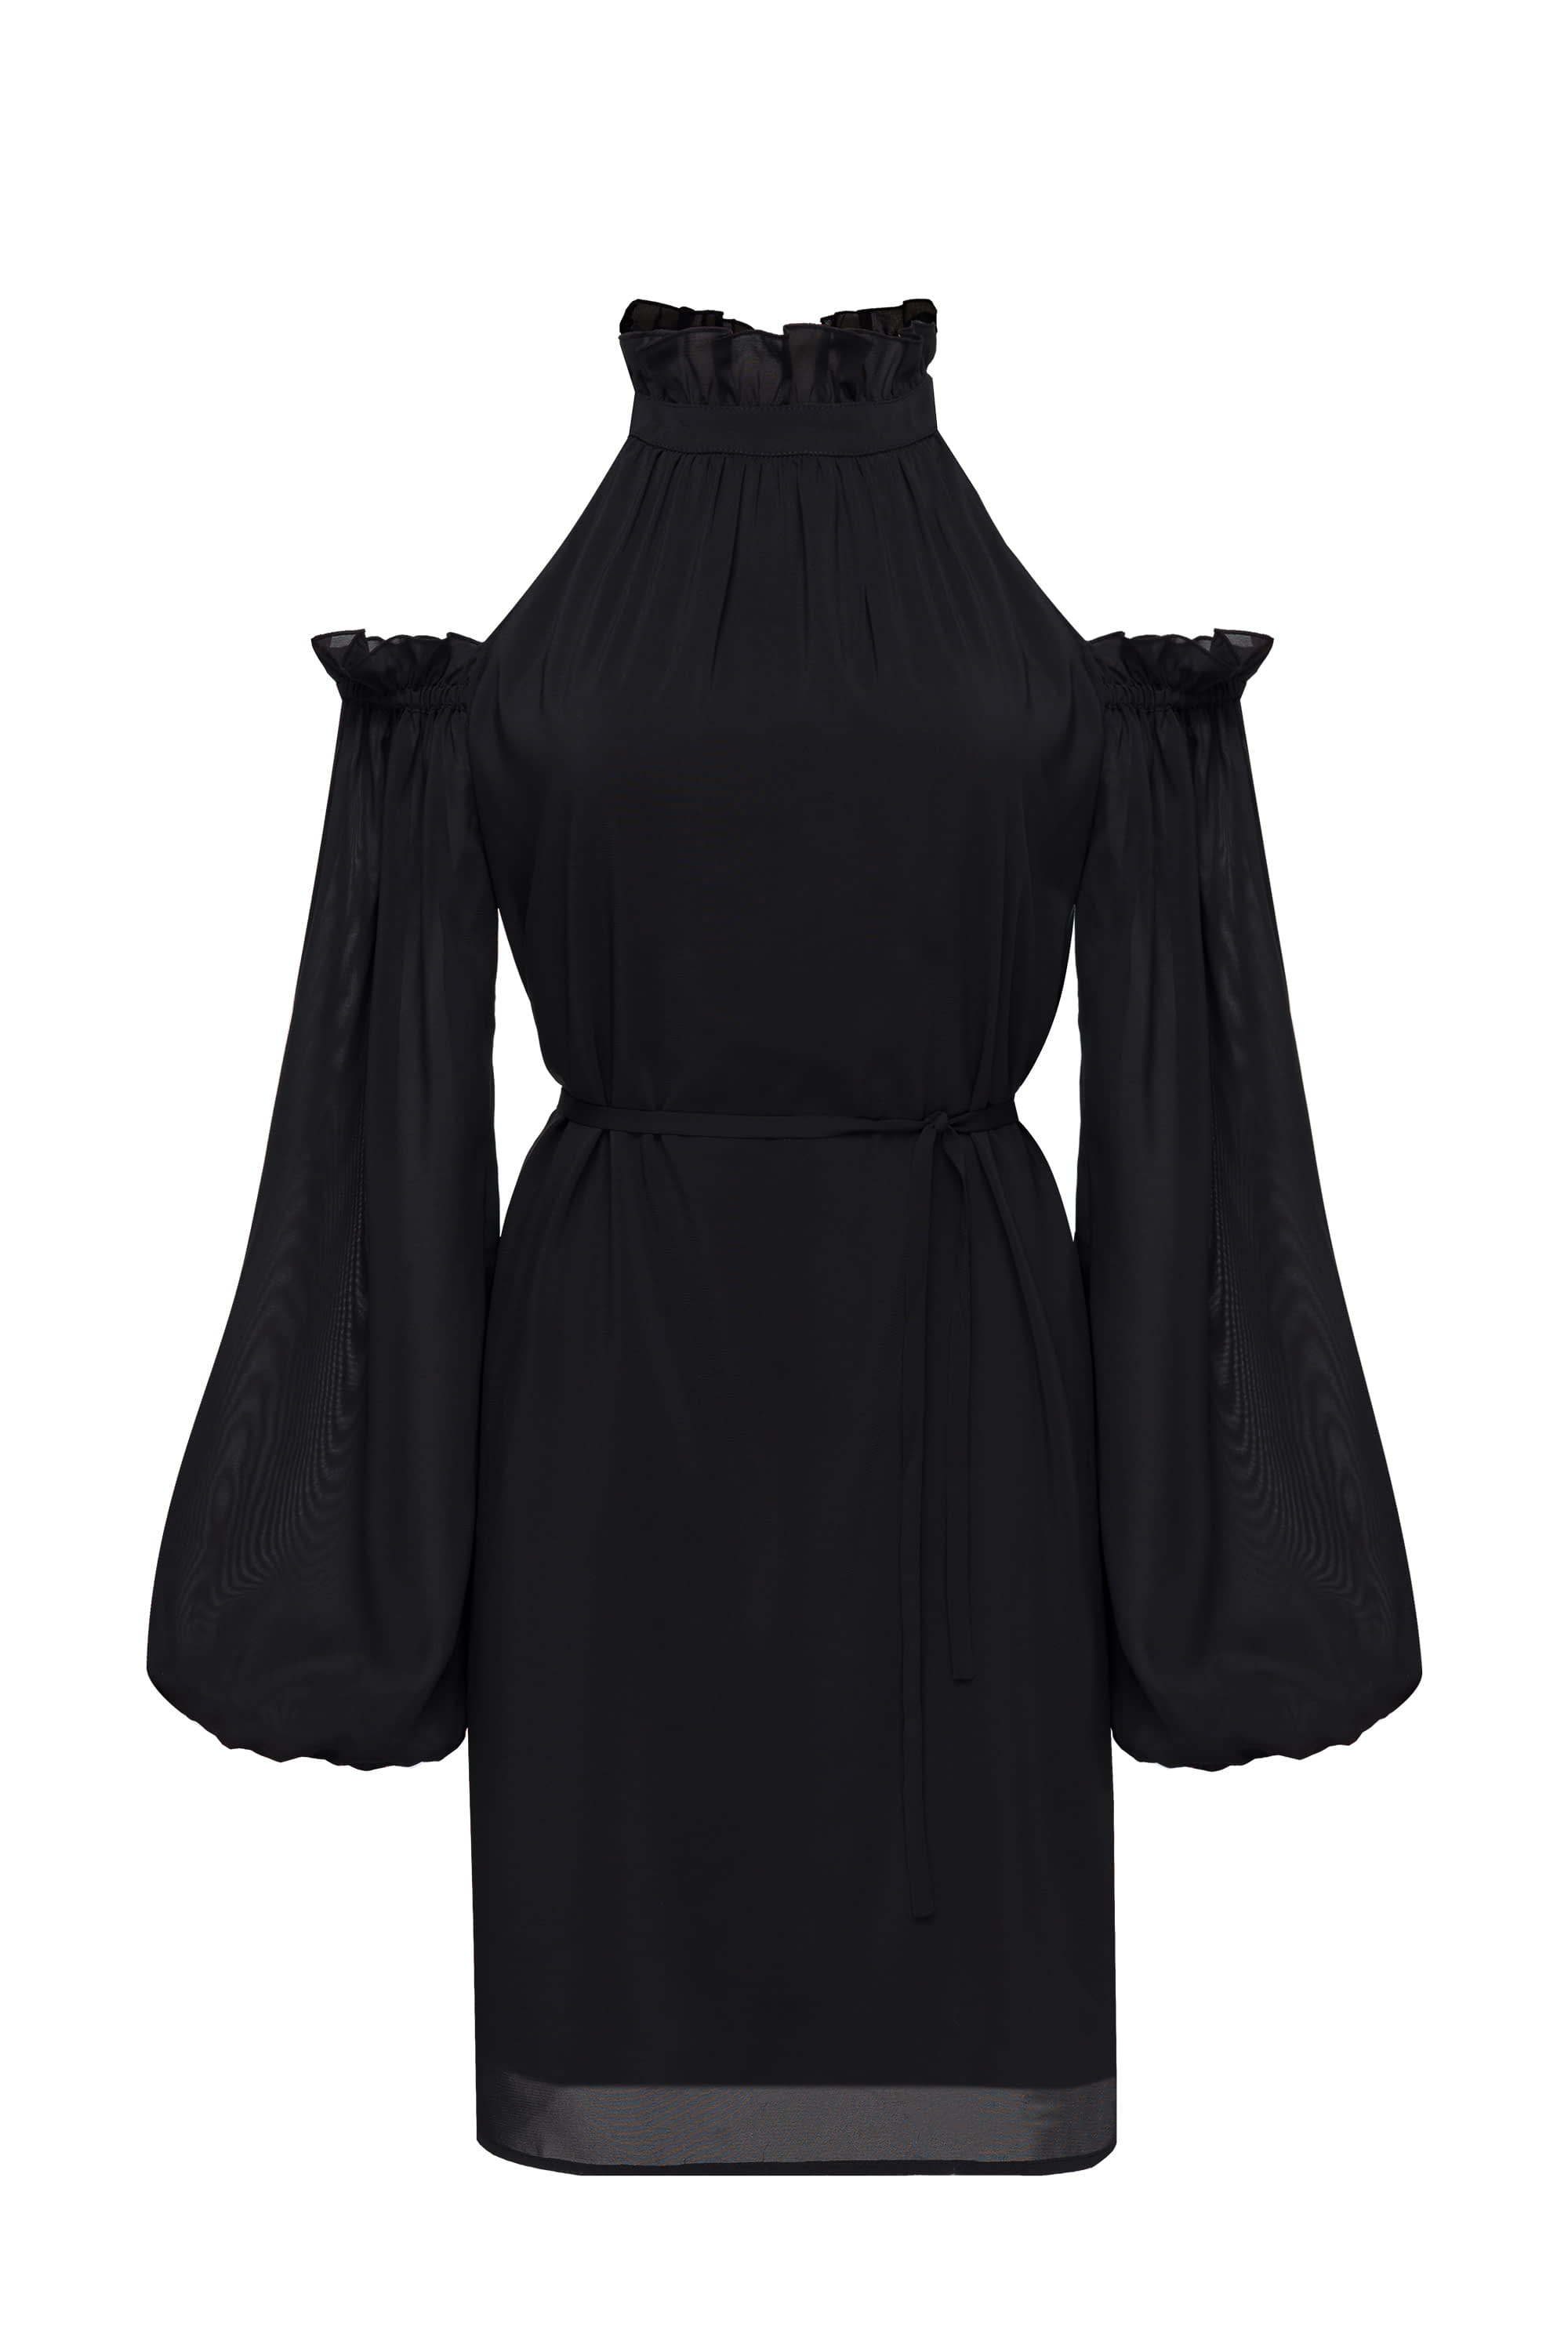 Open shoulder black chiffon dress, photo 9